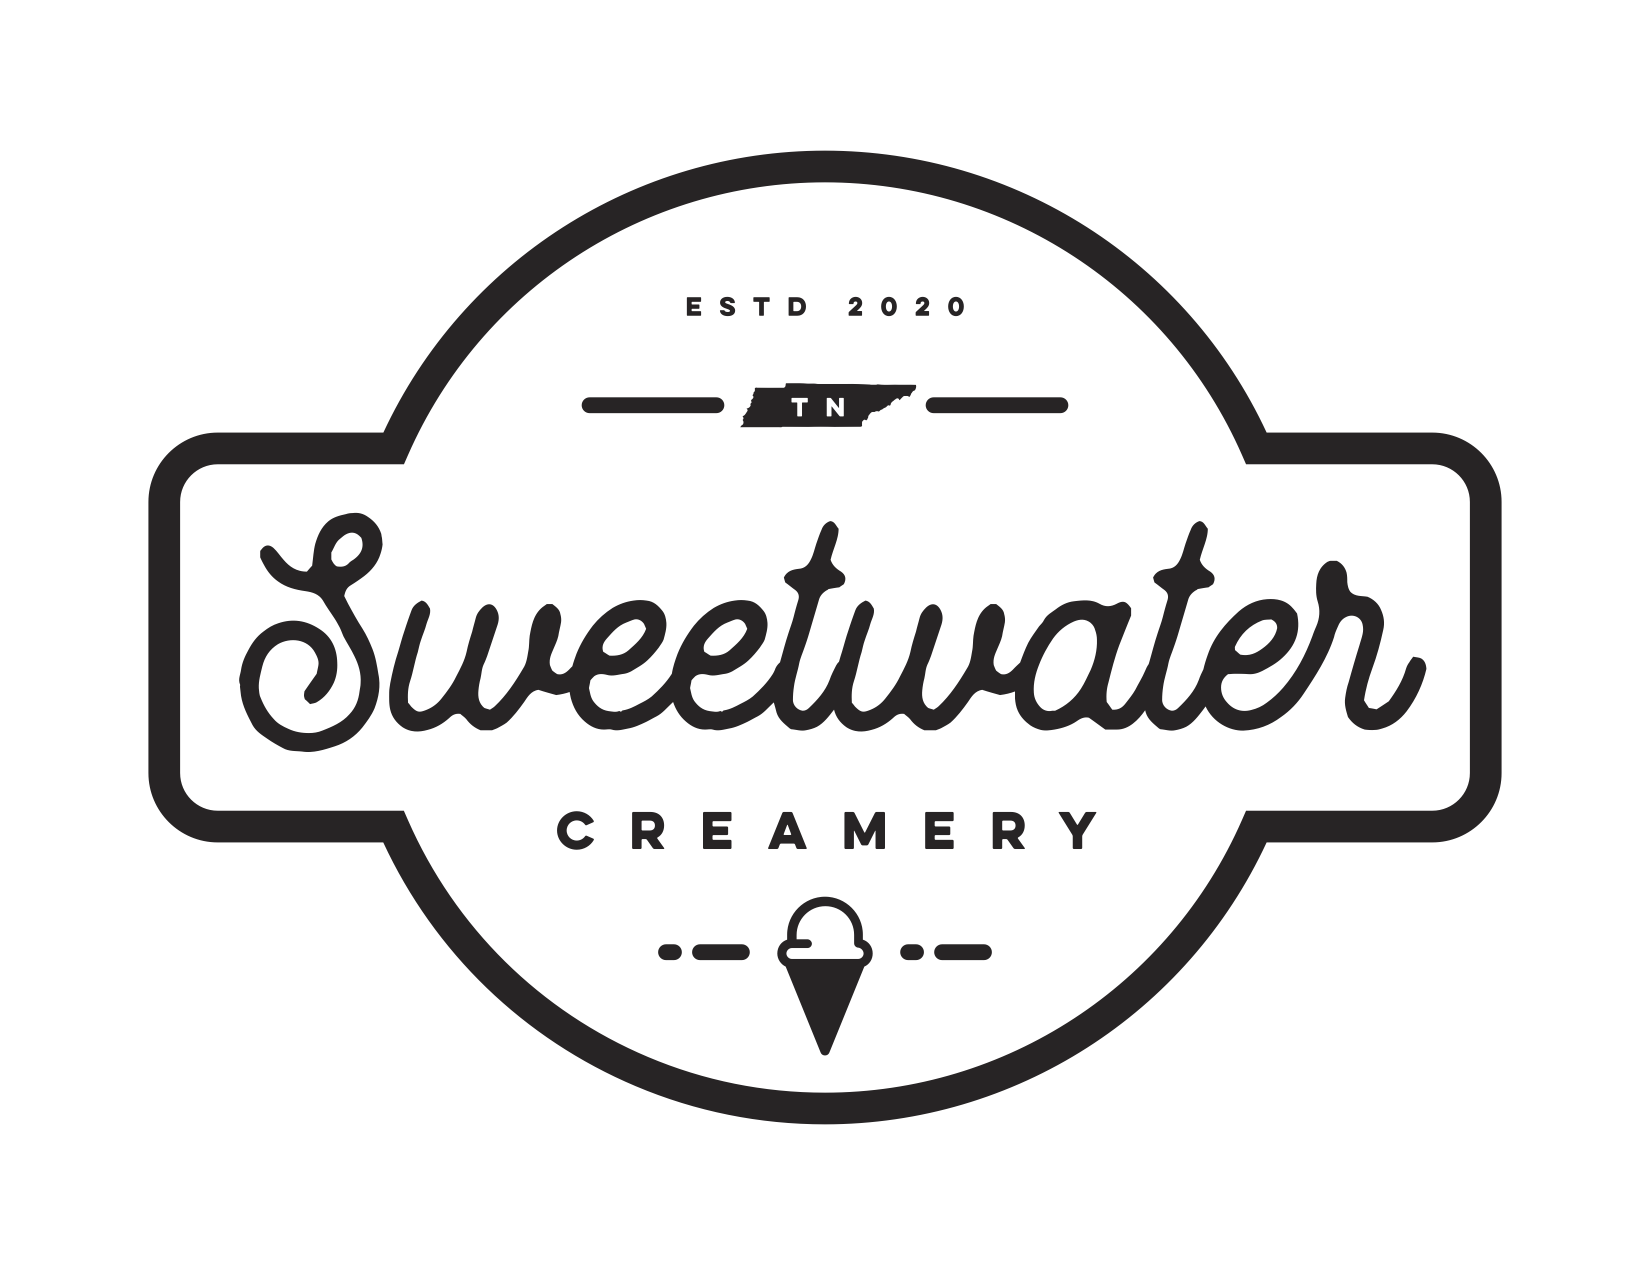 Sweetwater Creamery LLC